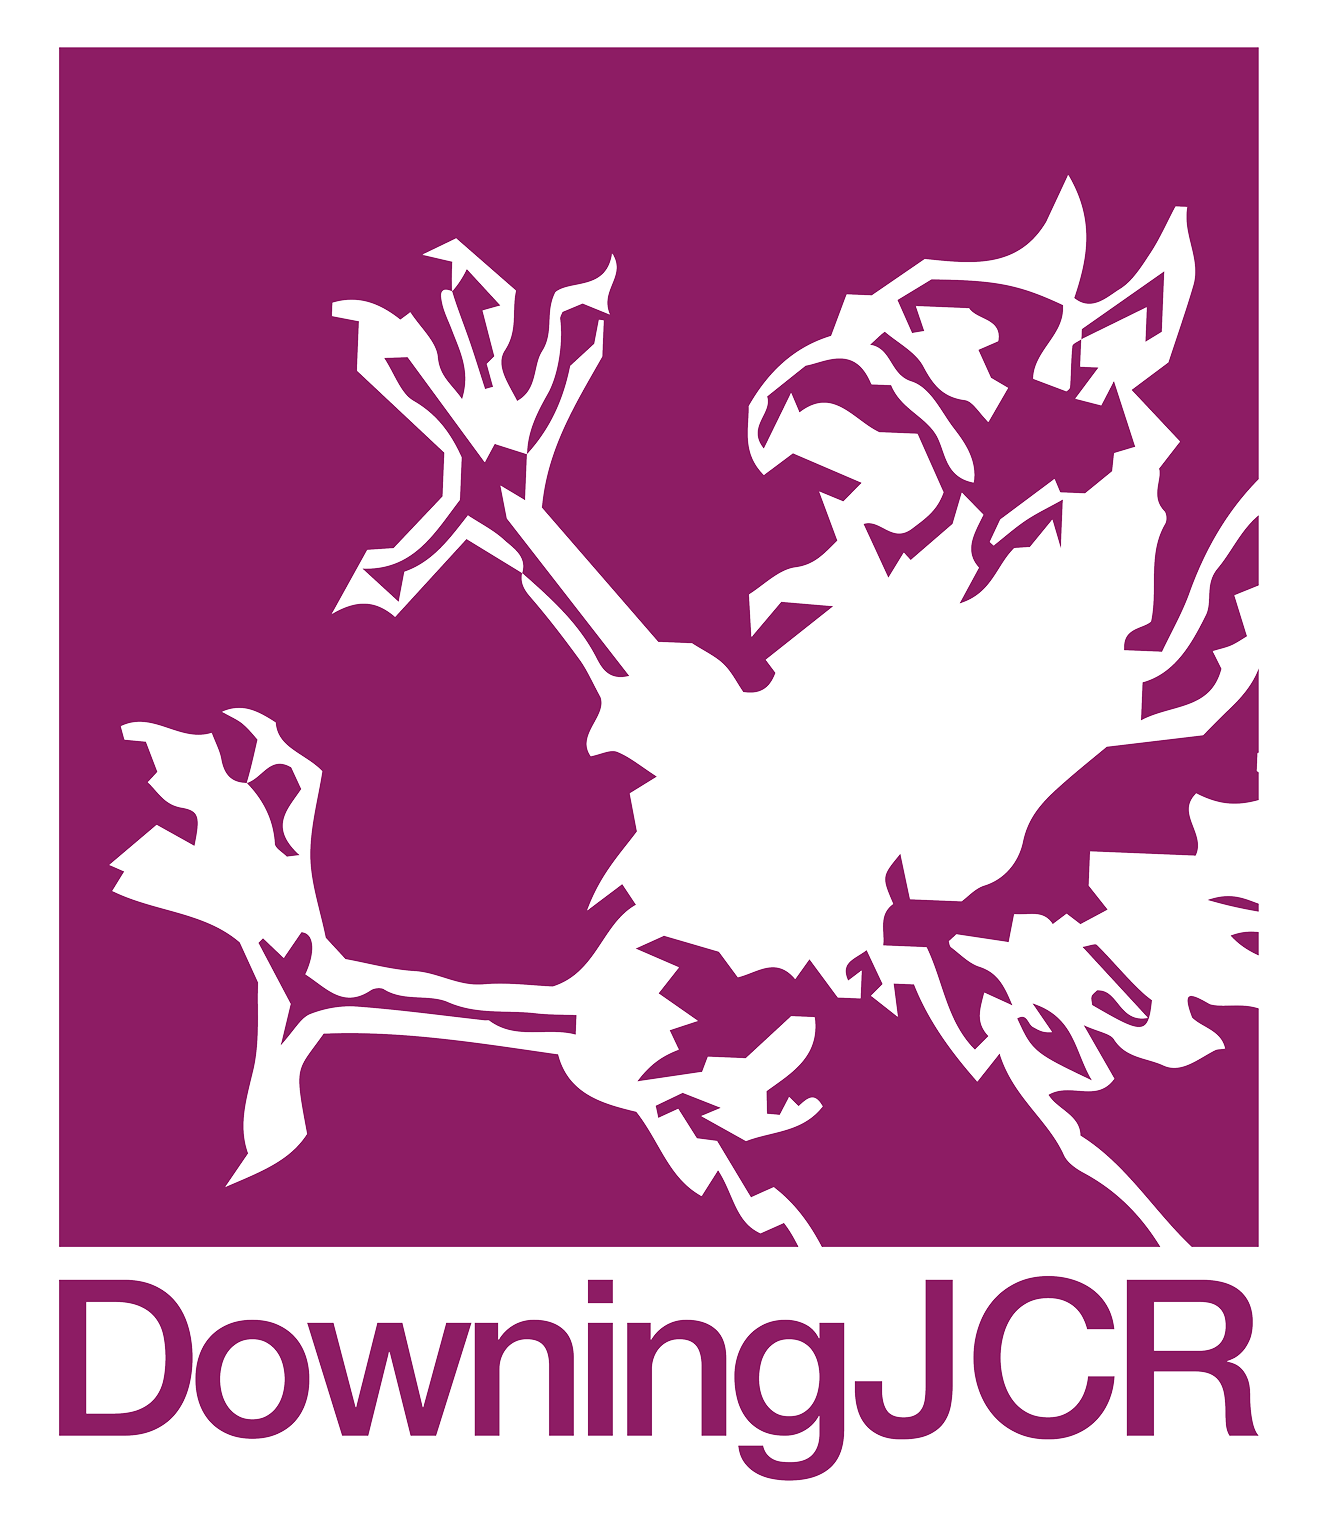 Downing JCR